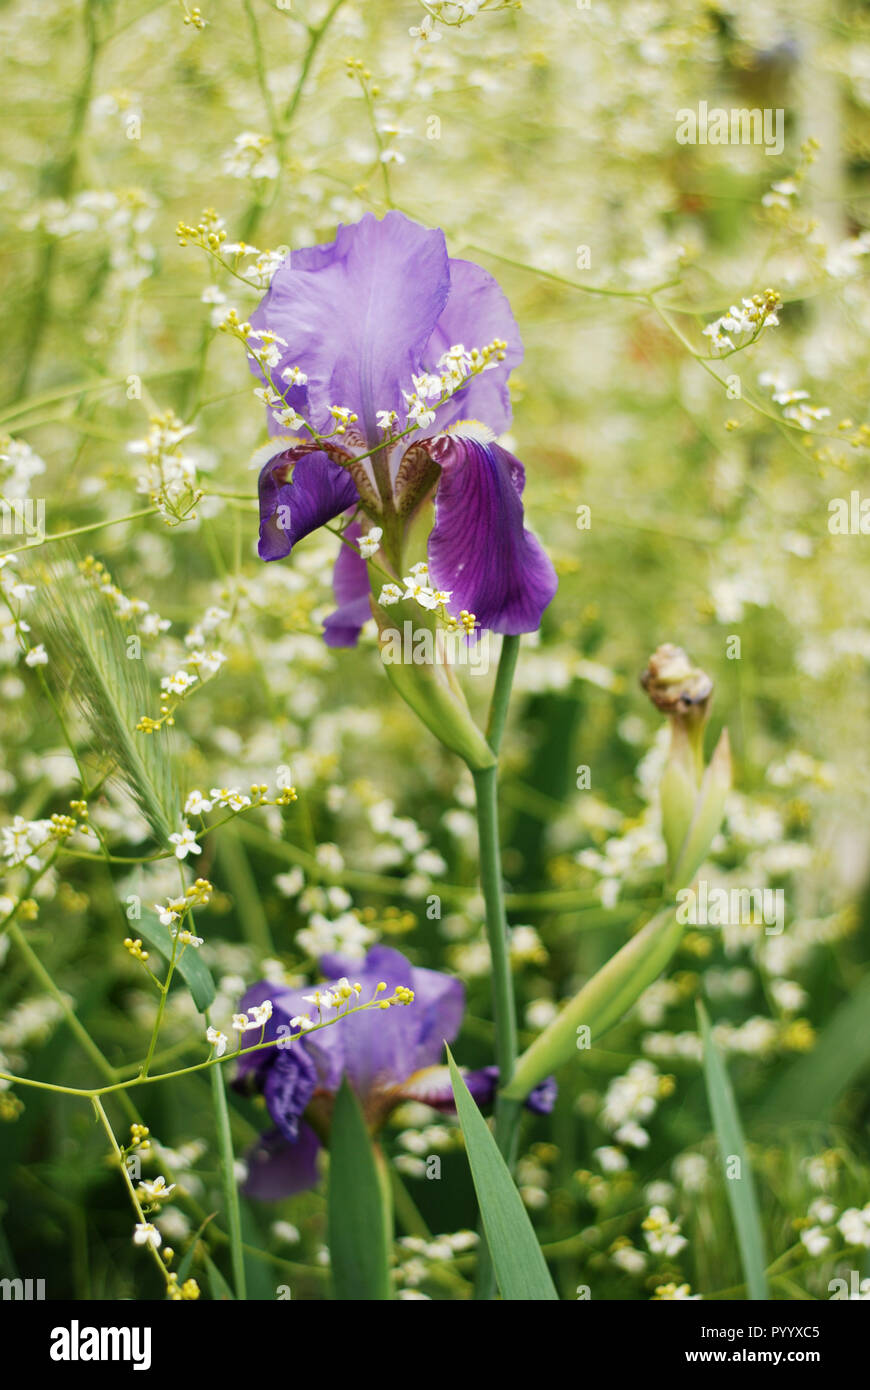 Iris Blume im grünen Garten Nahaufnahme Stockfoto